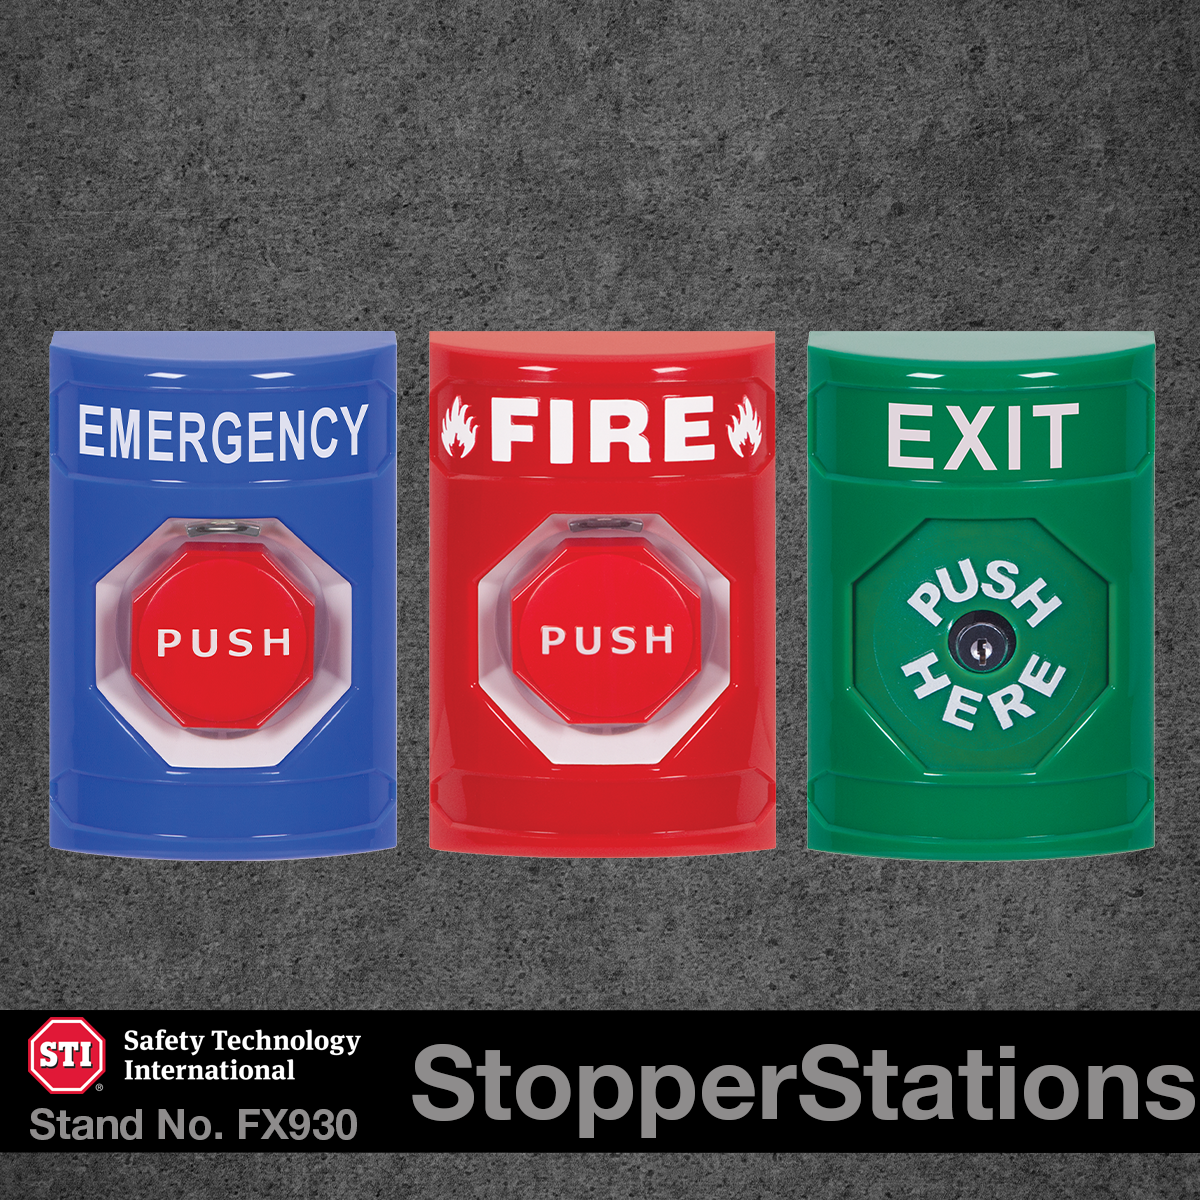 Stopper ® Stations